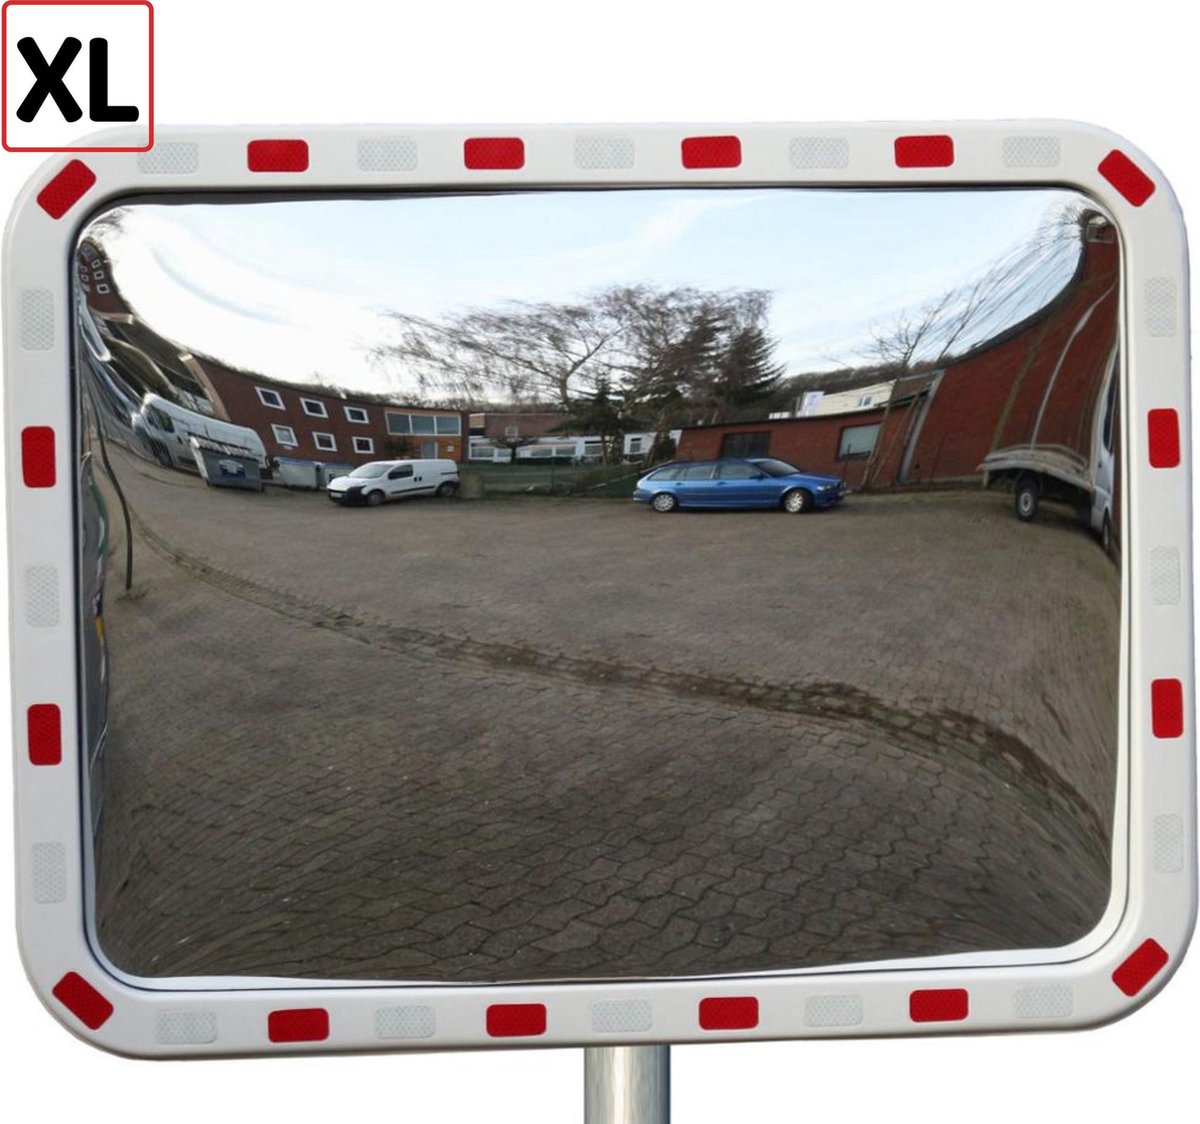 Verkeersspiegel Uitrit Rechthoek met Reflectoren - 80x60 cm - XL Veiligheidsspiegel Dodehoekspiegel Buiten - Traffic Mirror - Bolle Spiegel